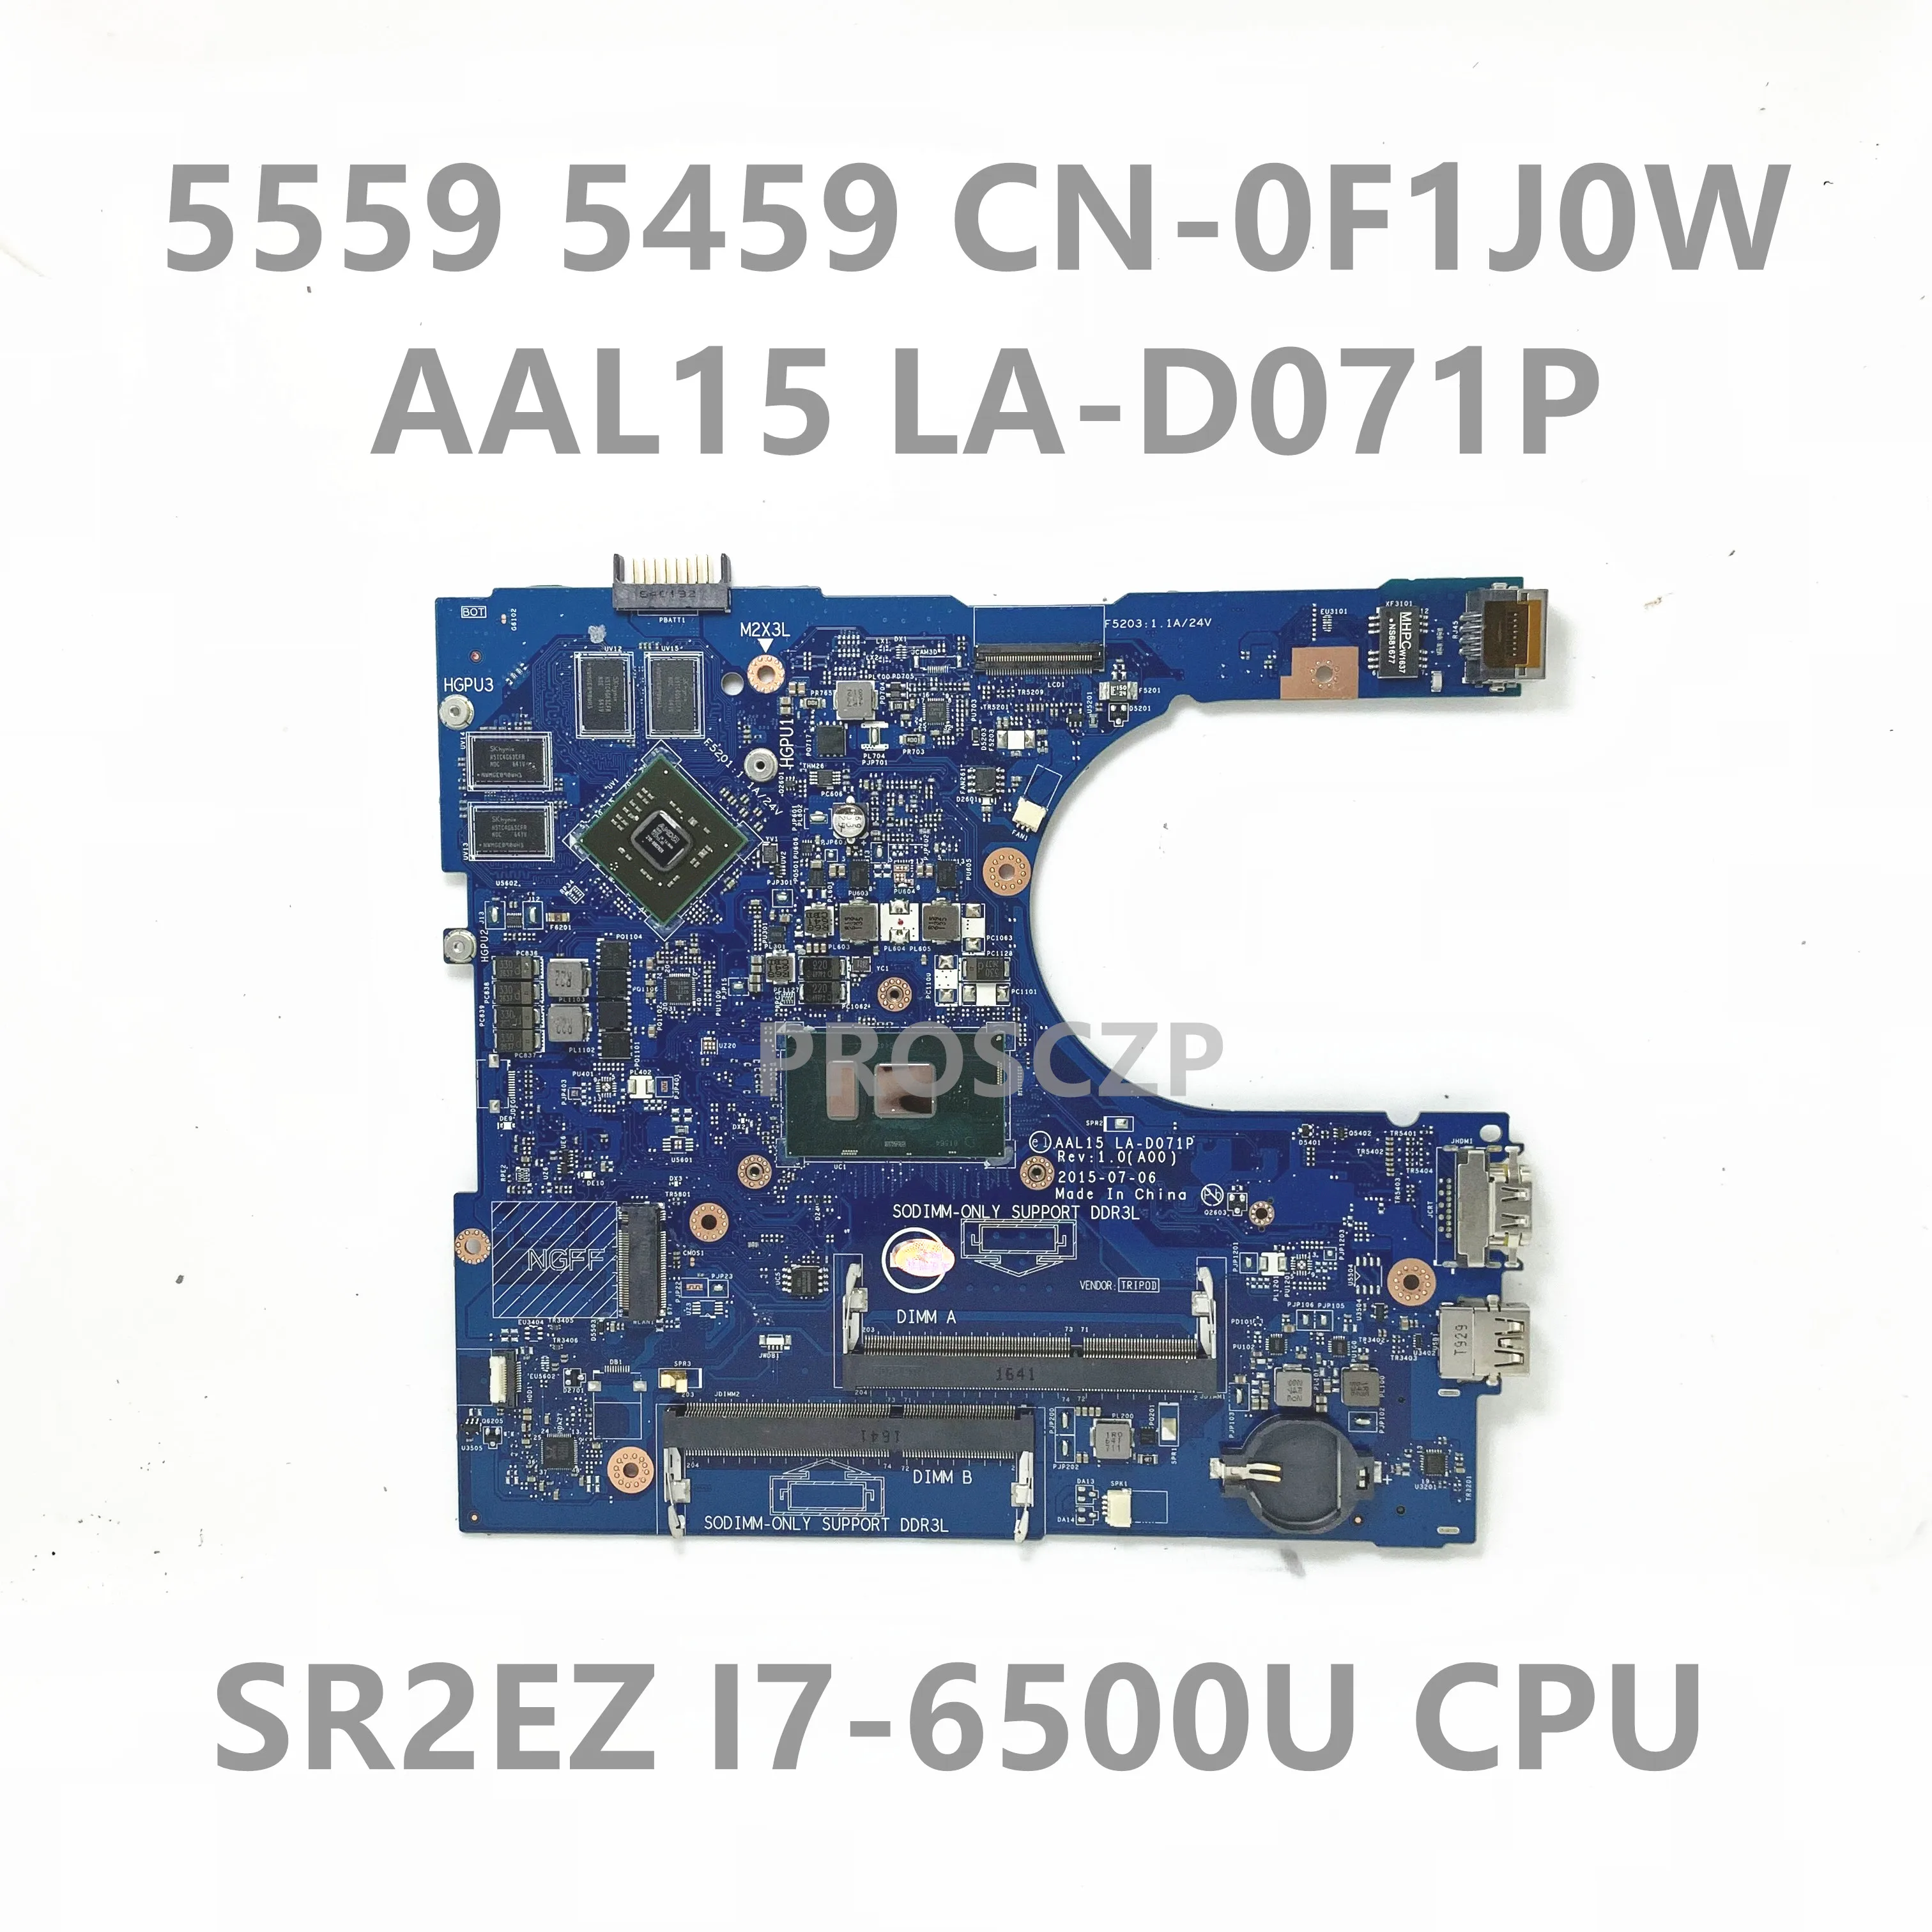 

CN-0F1J0W 0F1J0W F1J0W For DELL 15 5559 5459 5759 Laptop Motherboard AAL15 LA-D071P W/ SR2EZ I7-6500U CPU 100% Full Working Well